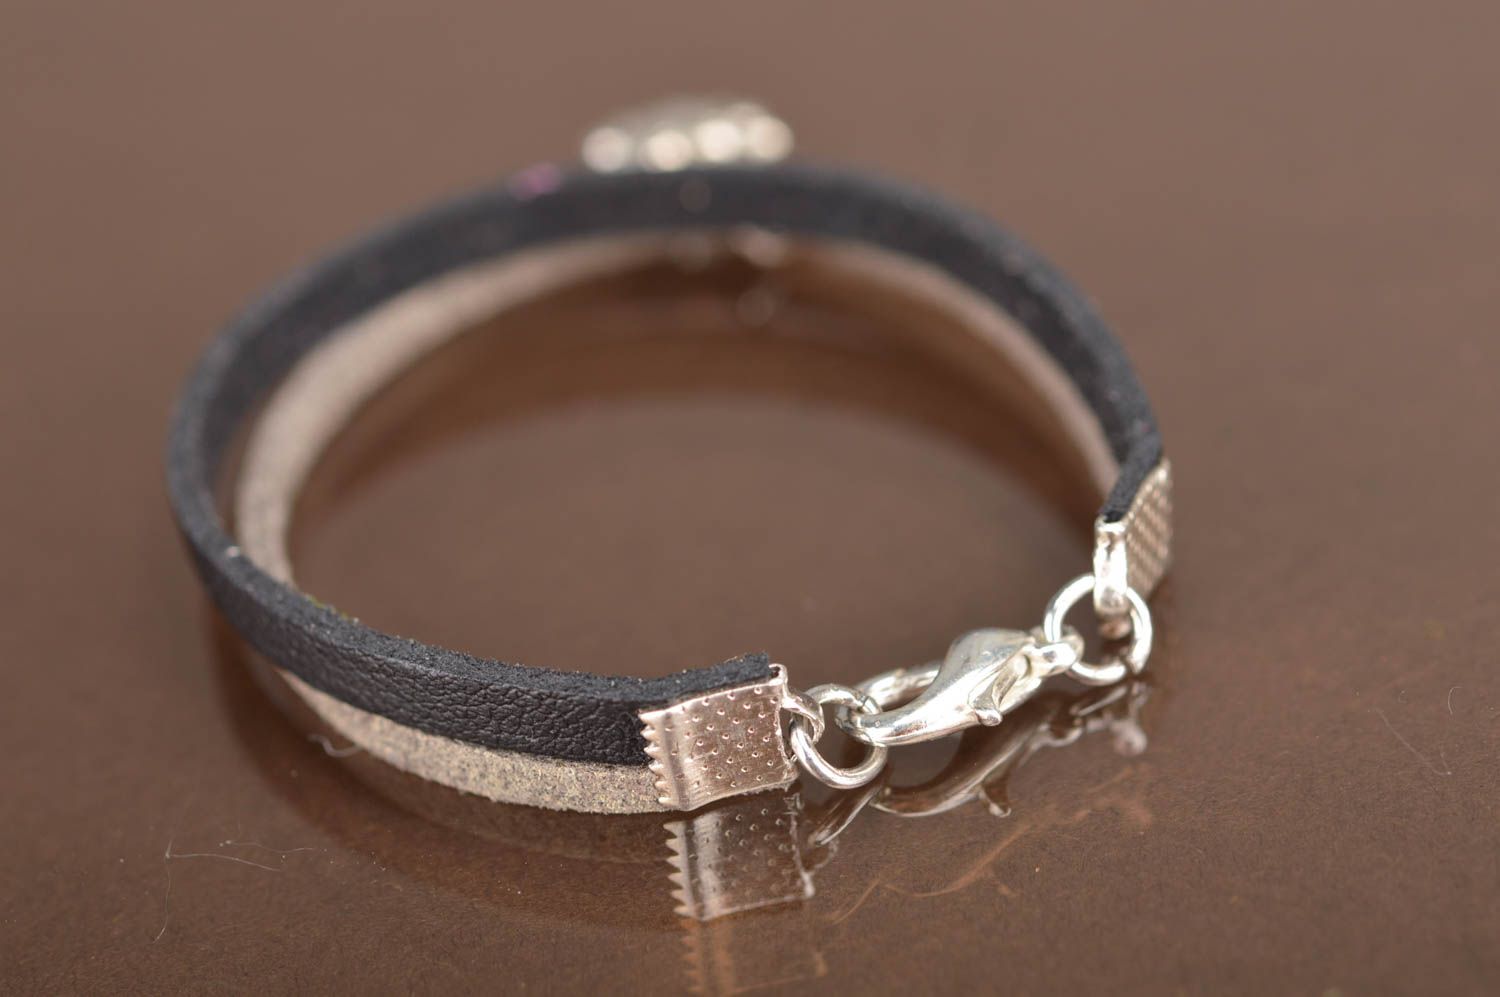 Handmade designer genuine leather cord bracelet black and beige with metal charm photo 4